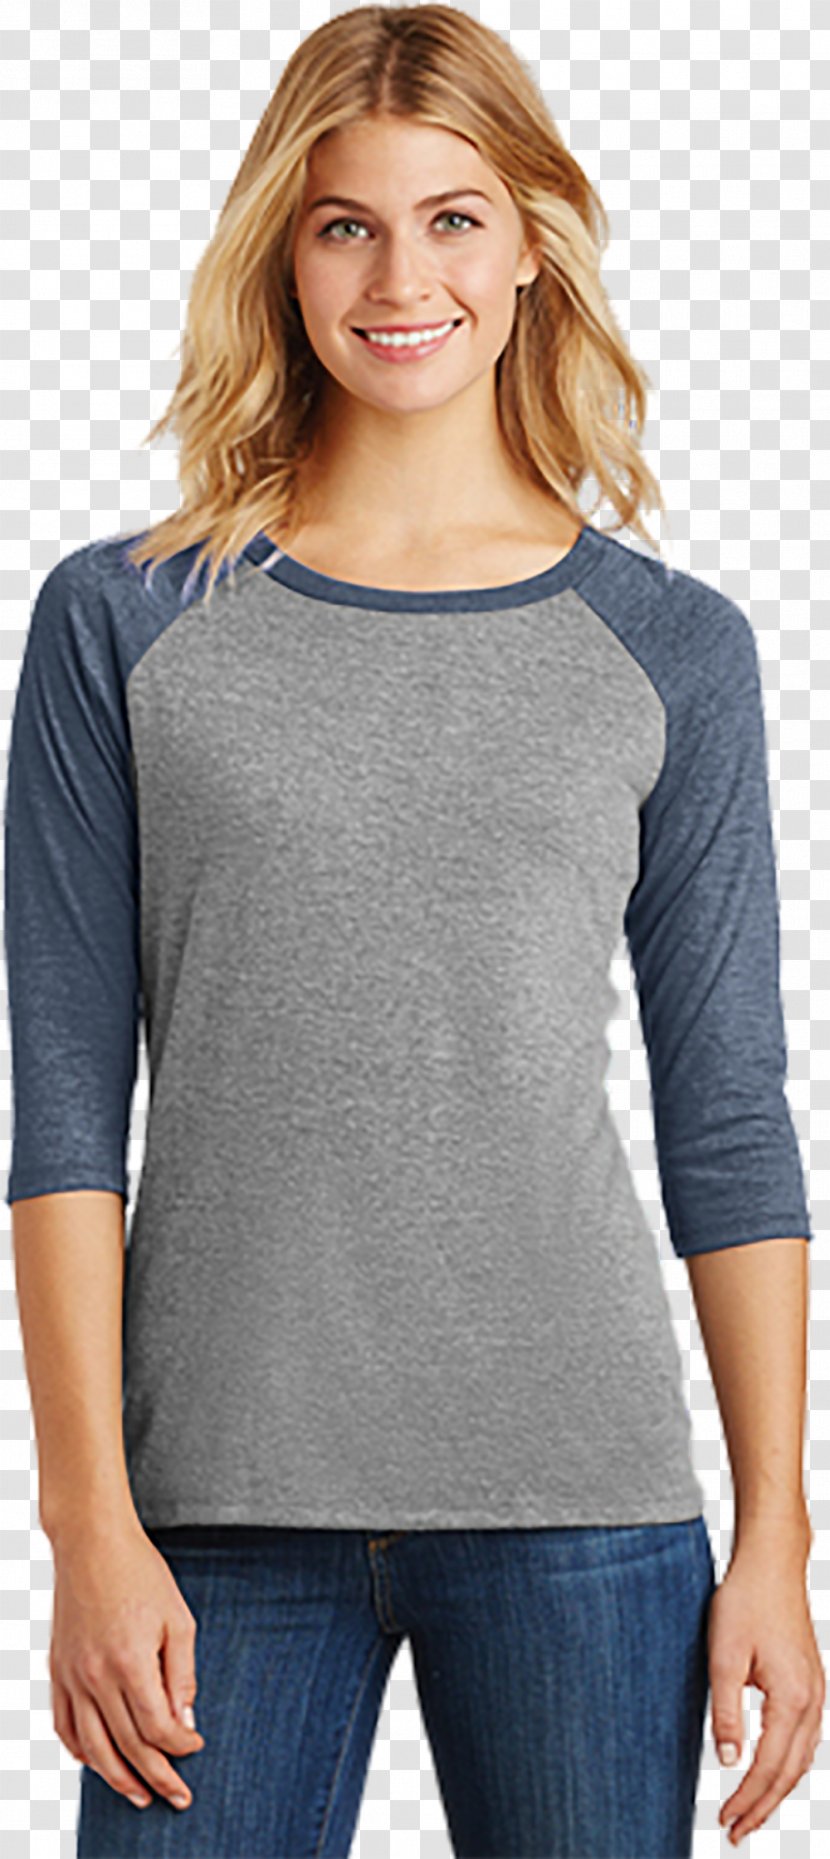 T-shirt Raglan Sleeve Clothing Top - Unisex Transparent PNG